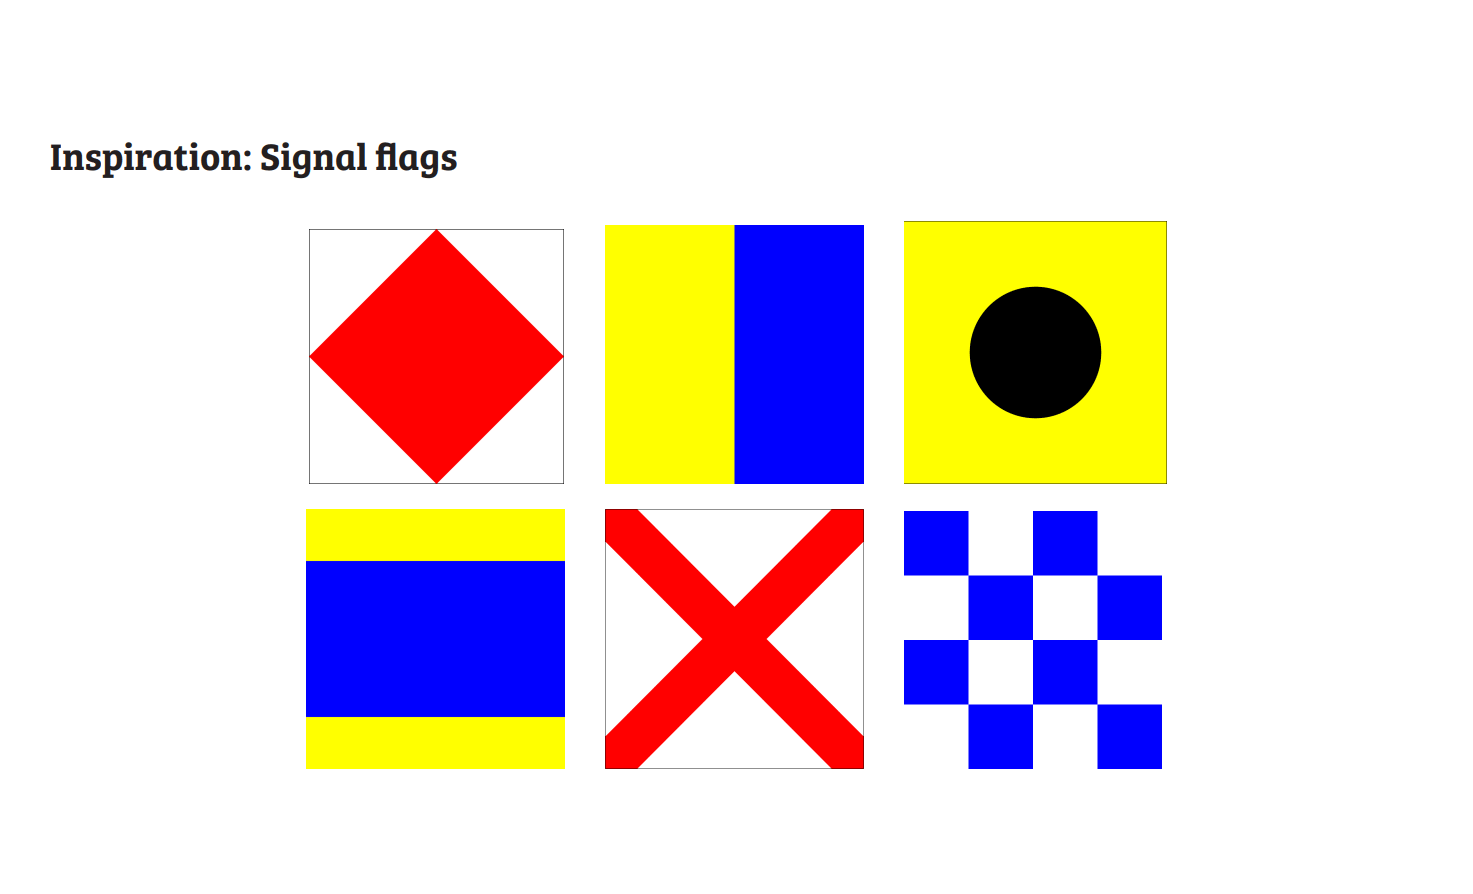 Maritime signal flags